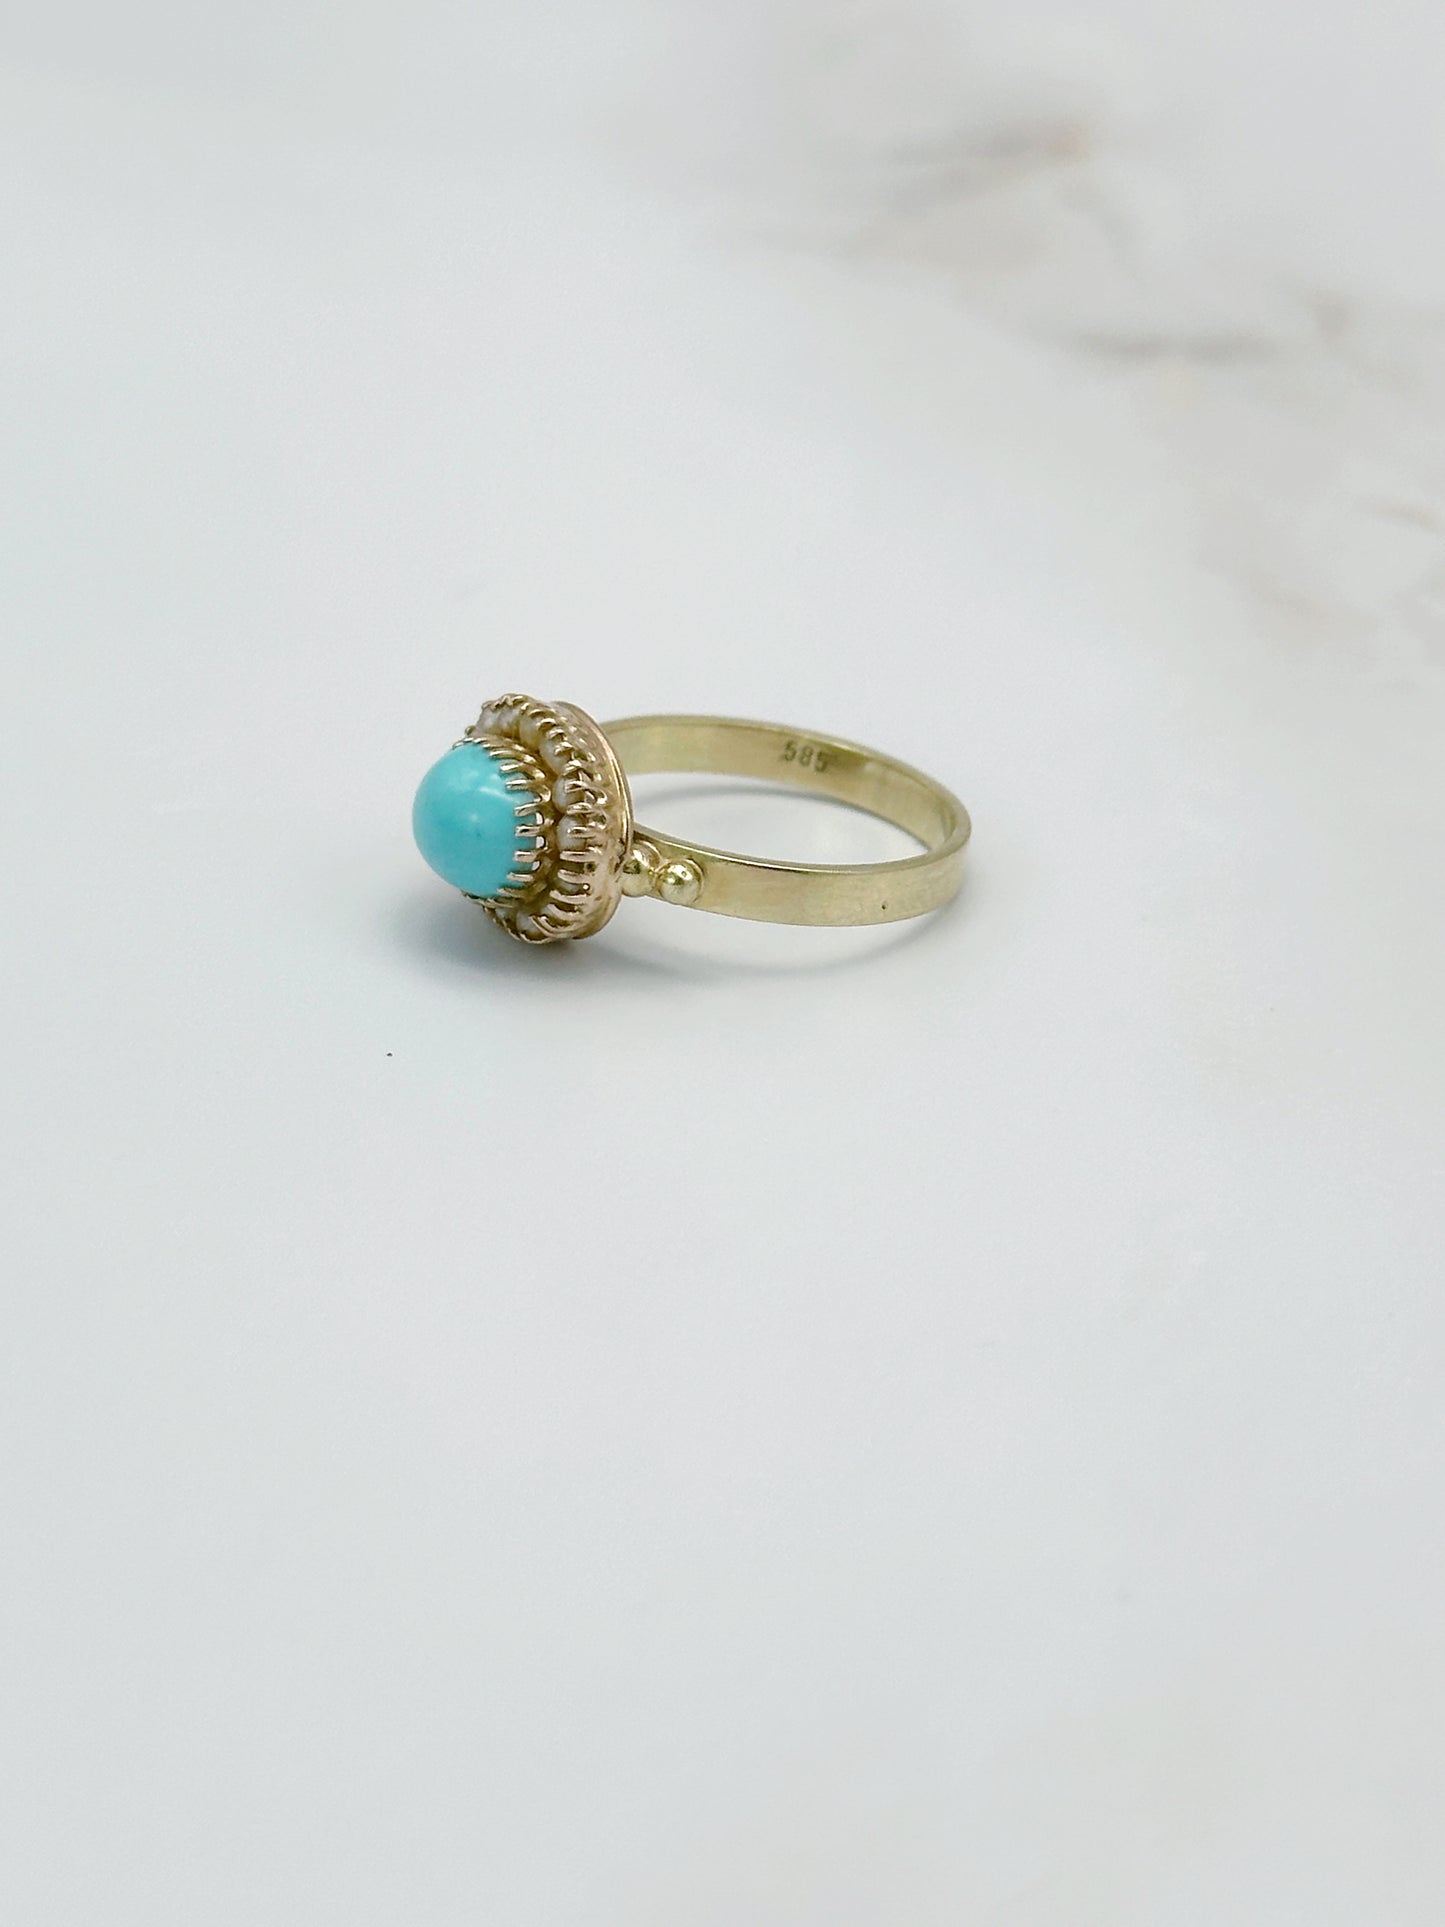 Zarter Vintage Ring mit Türkis